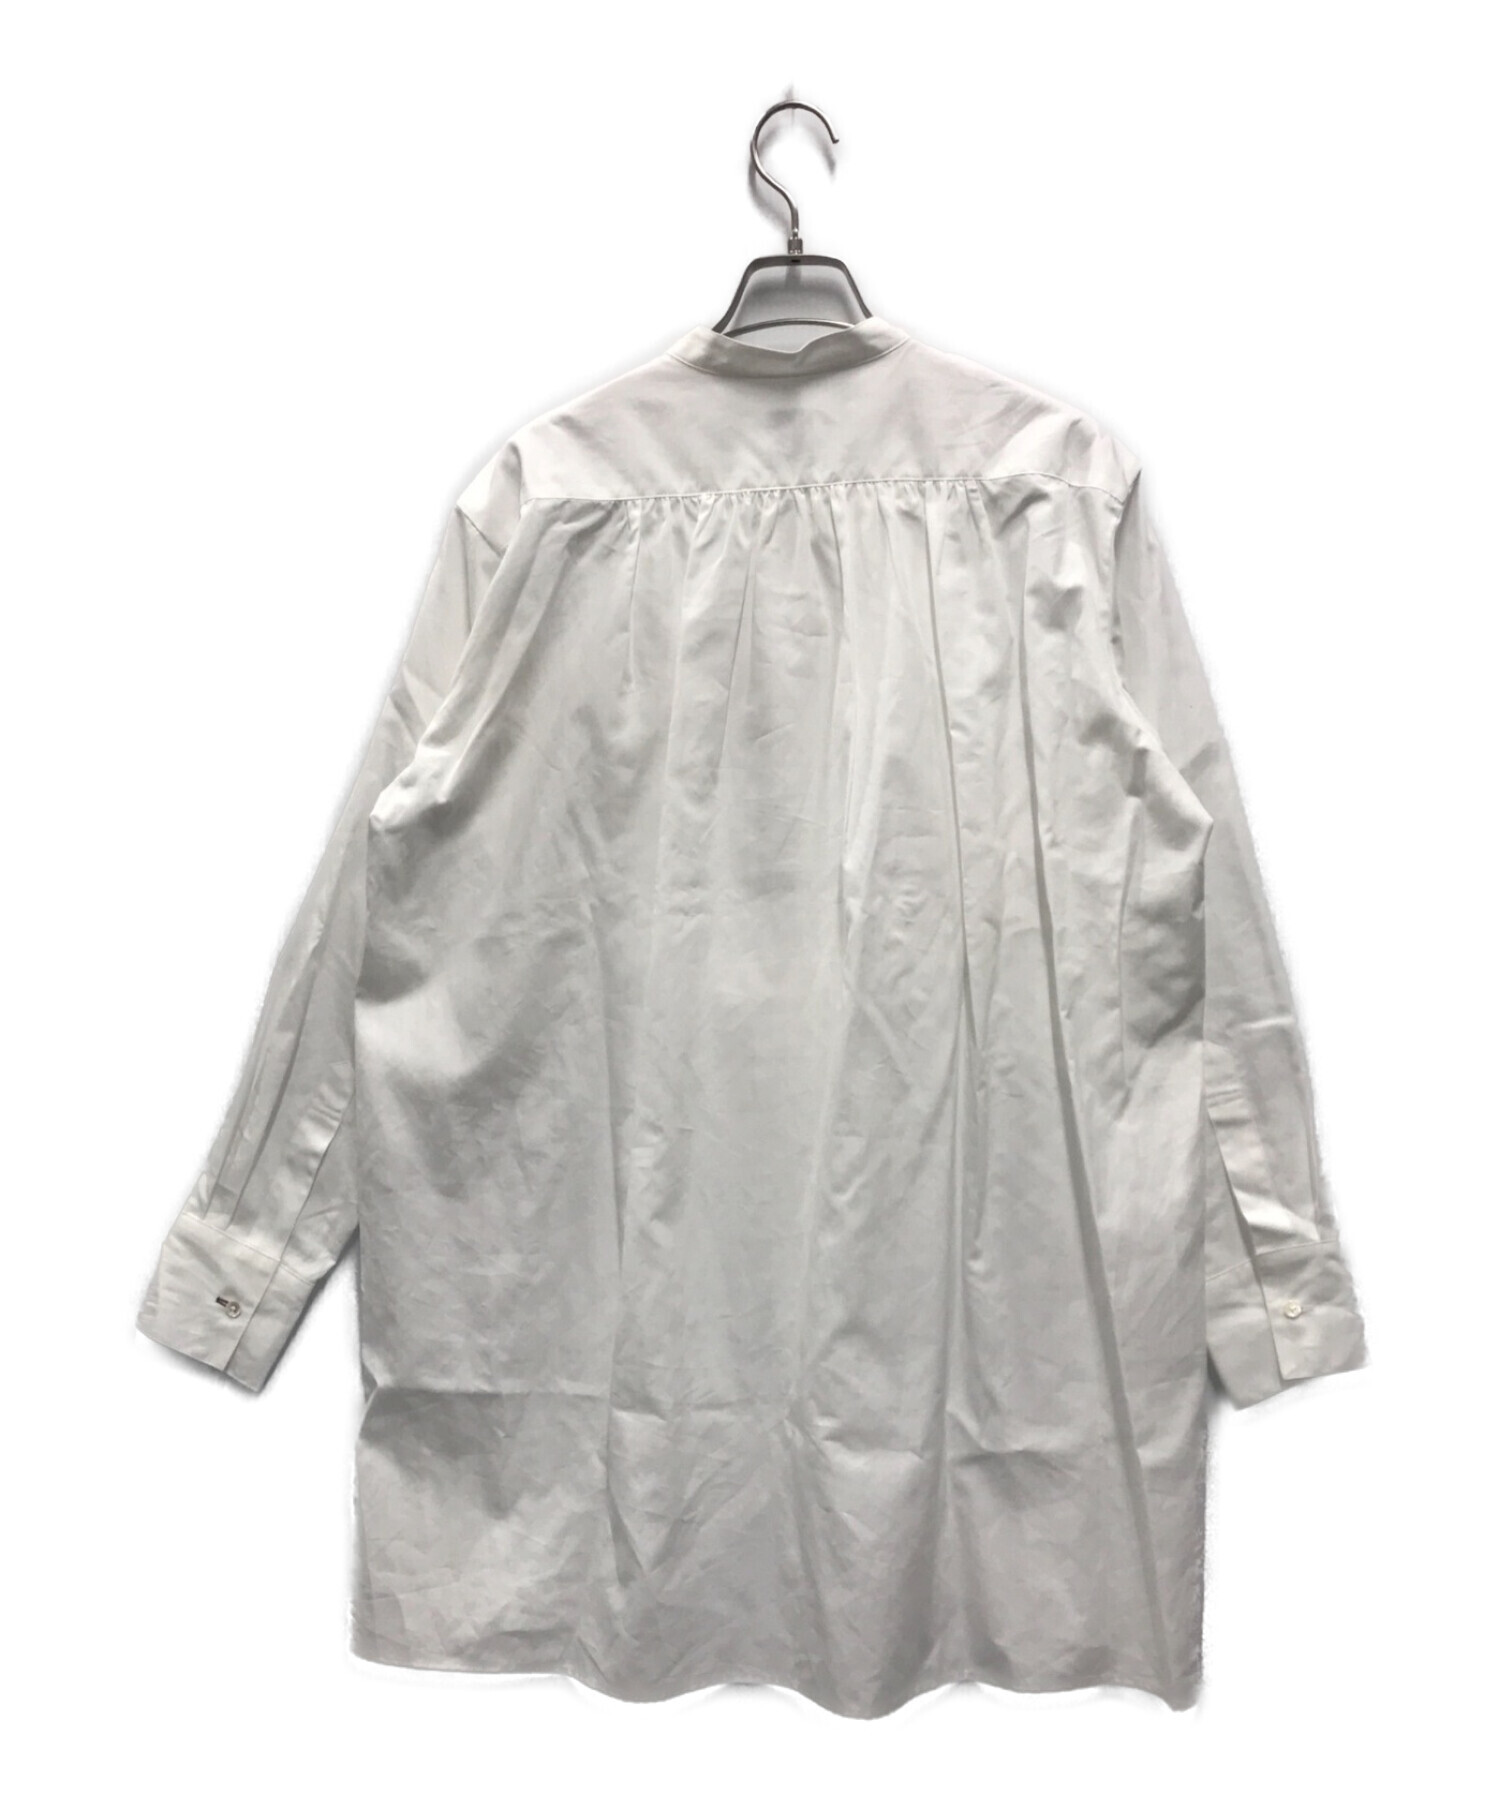 6(ROKU) BEAUTY&YOUTH (ロク ビューティーアンドユース) COTTON DRESS SHIRT ホワイト サイズ:36